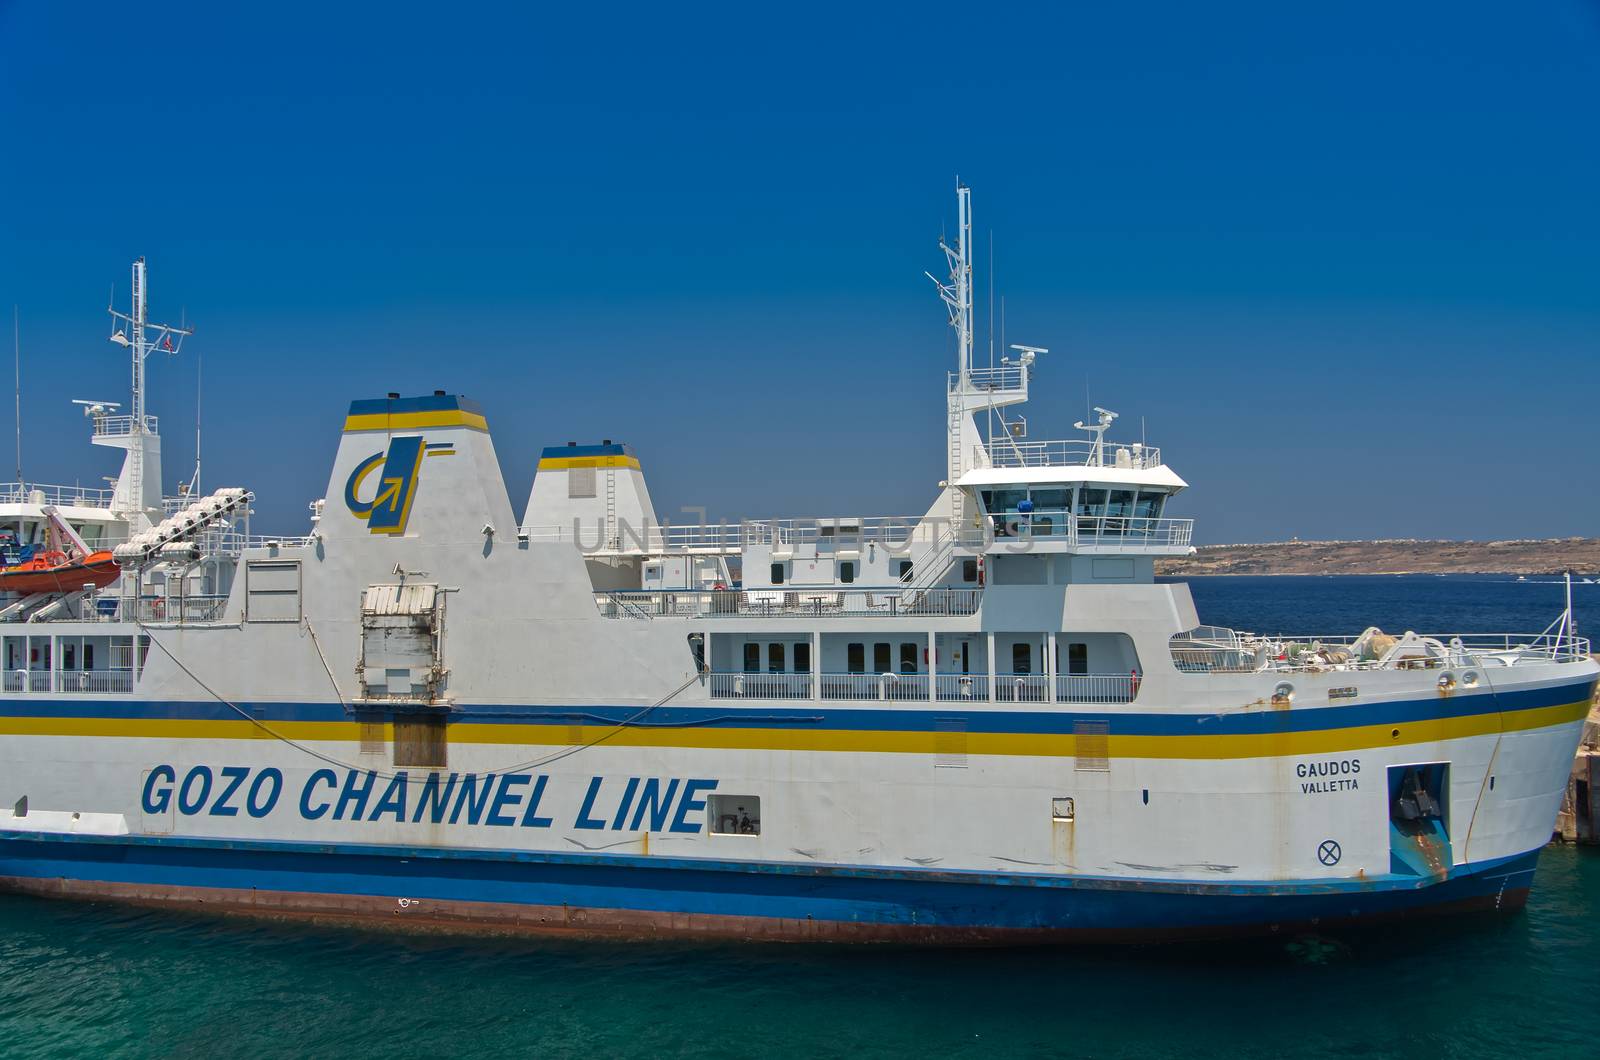 Cross-channel ferry by dario